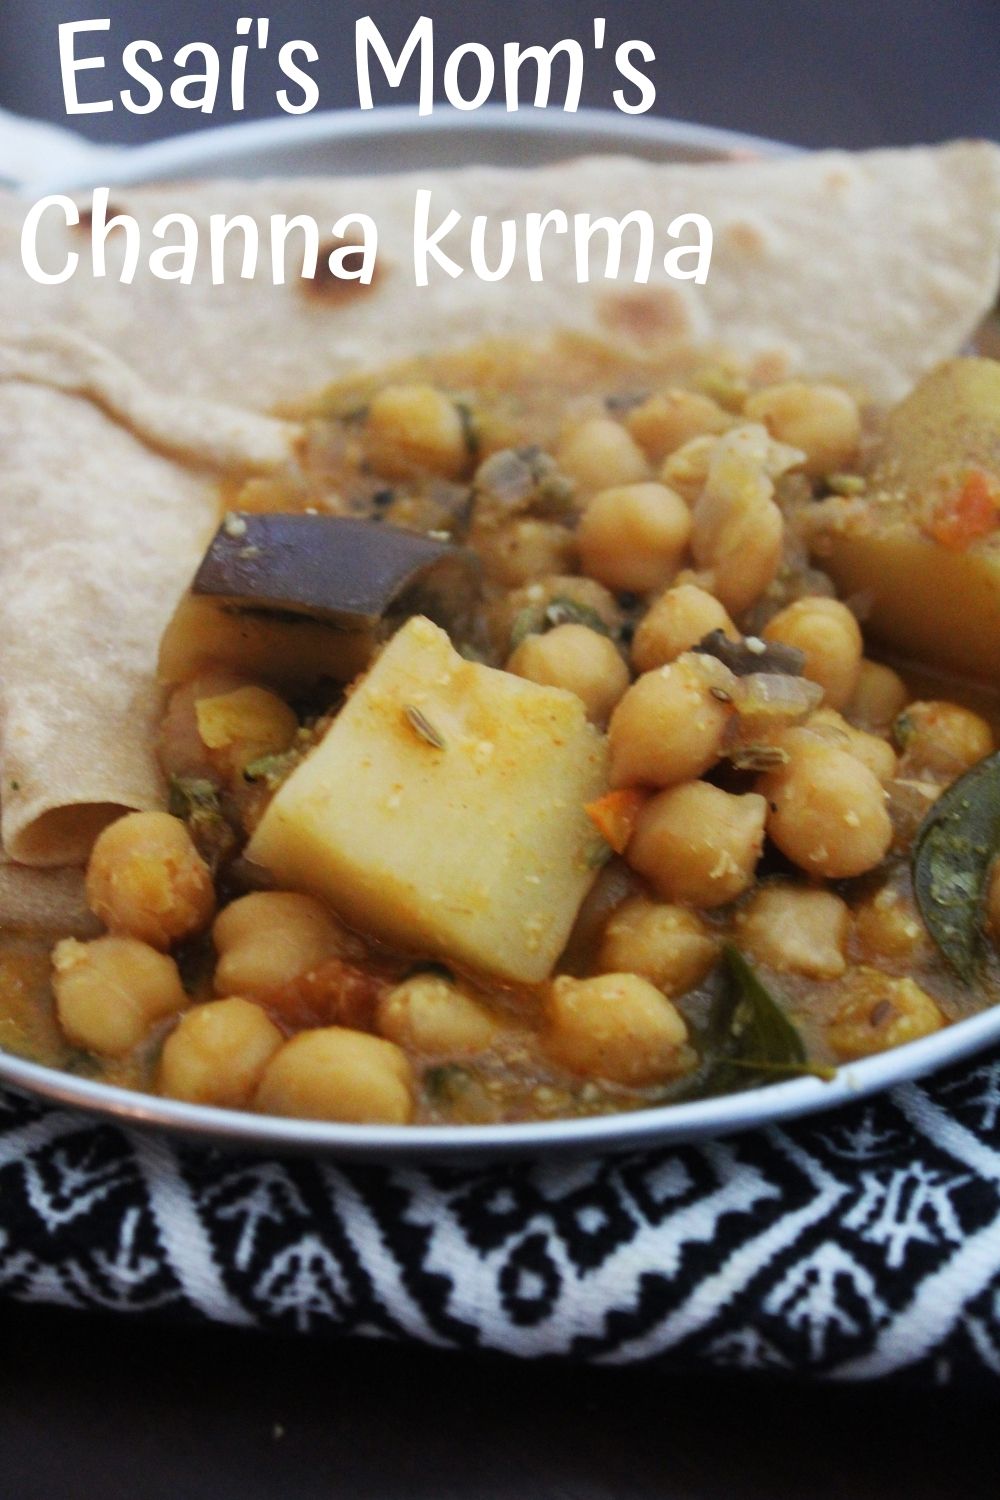 channa kurma recipe